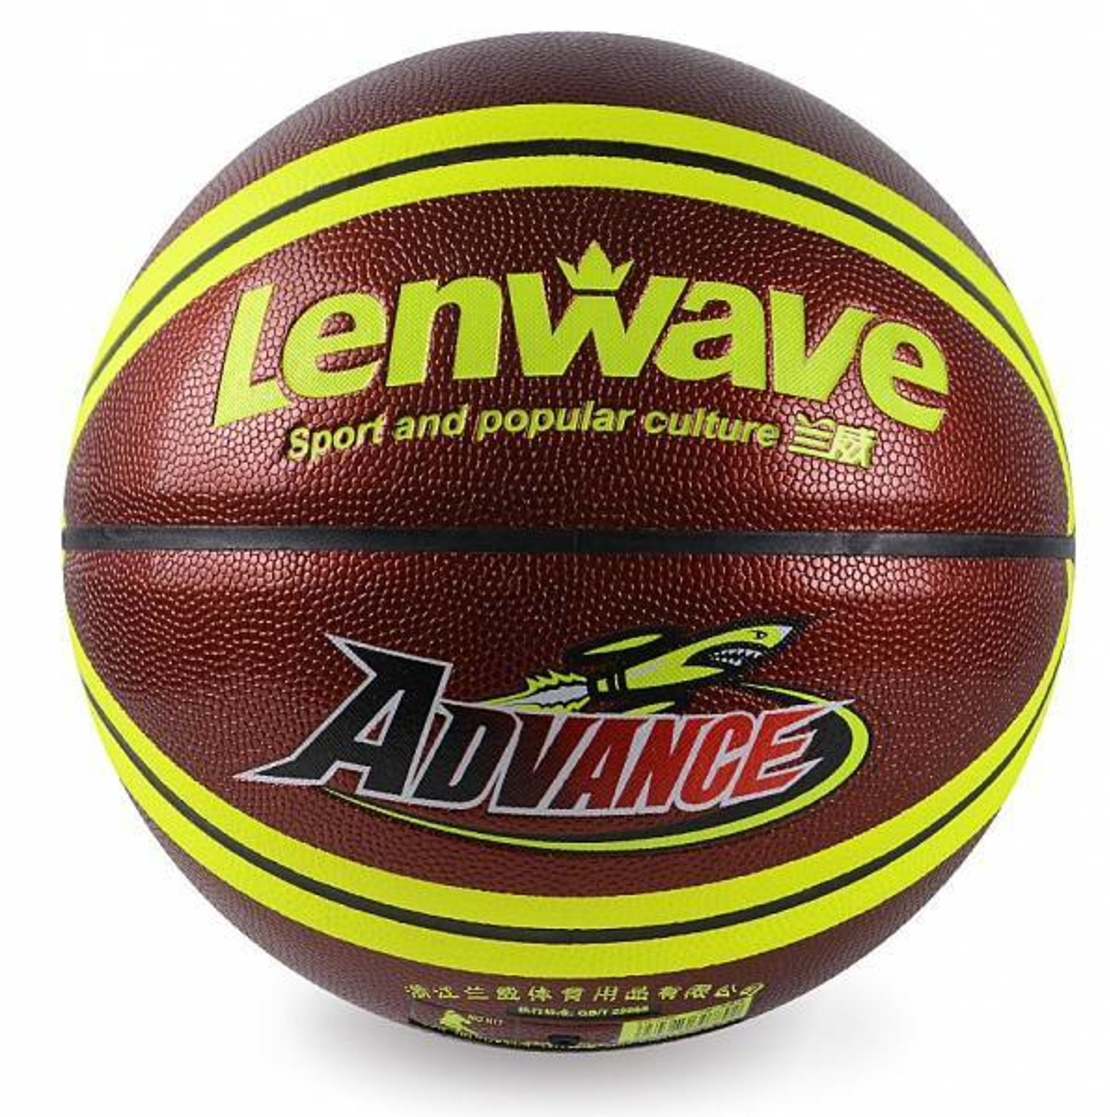 כדור כדורסל 7 עור איכותי LENWAVE 0789